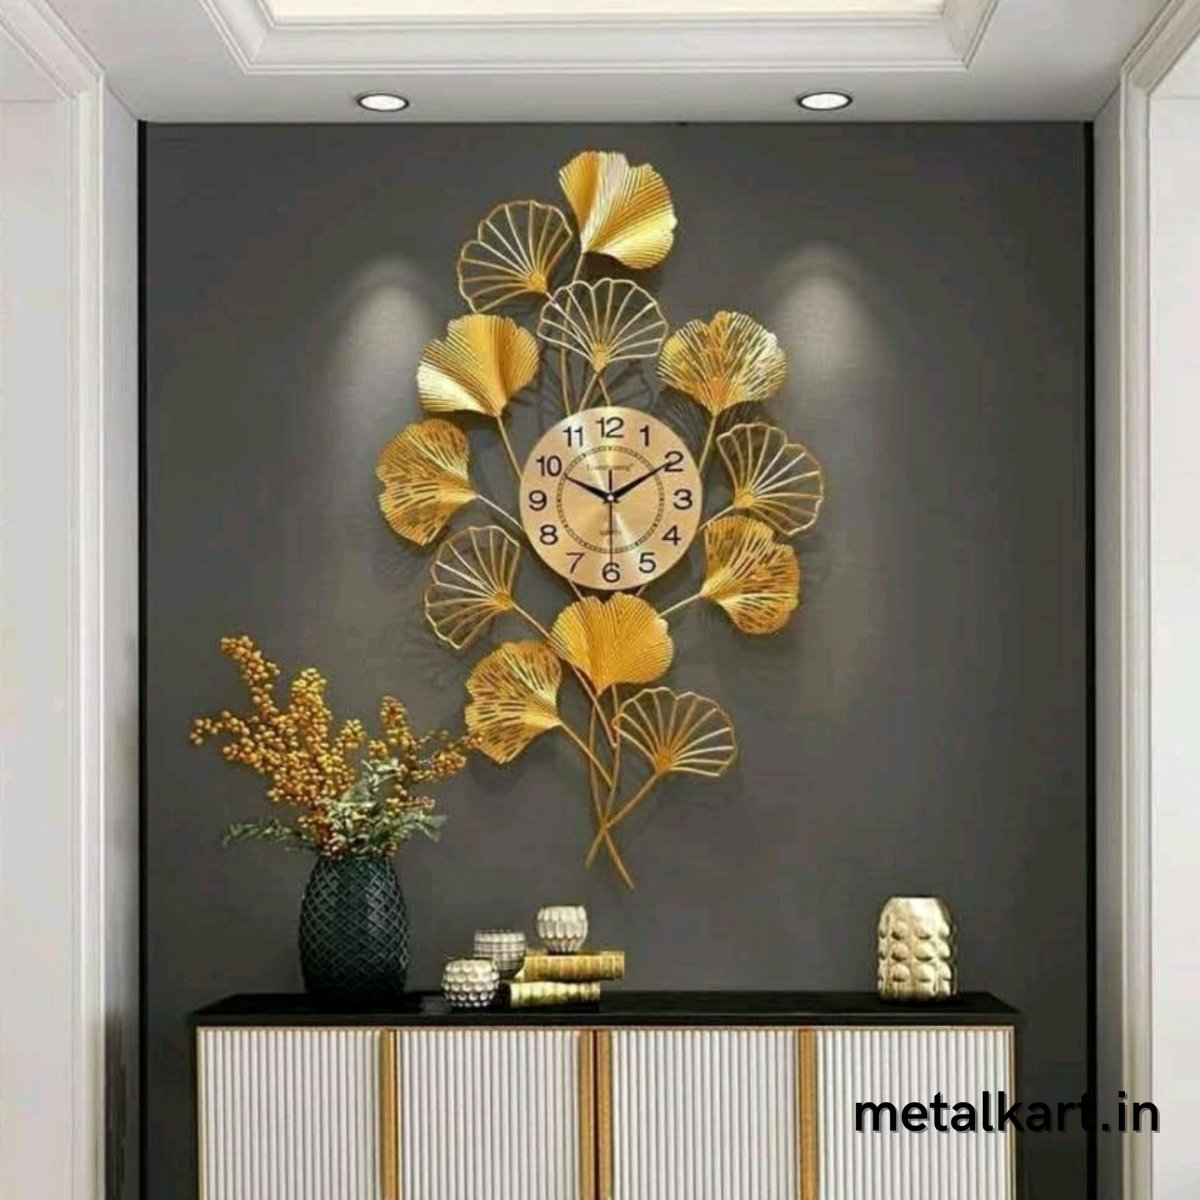 Golden metallic Furrow wall watch (24 x 36 Inches approx)